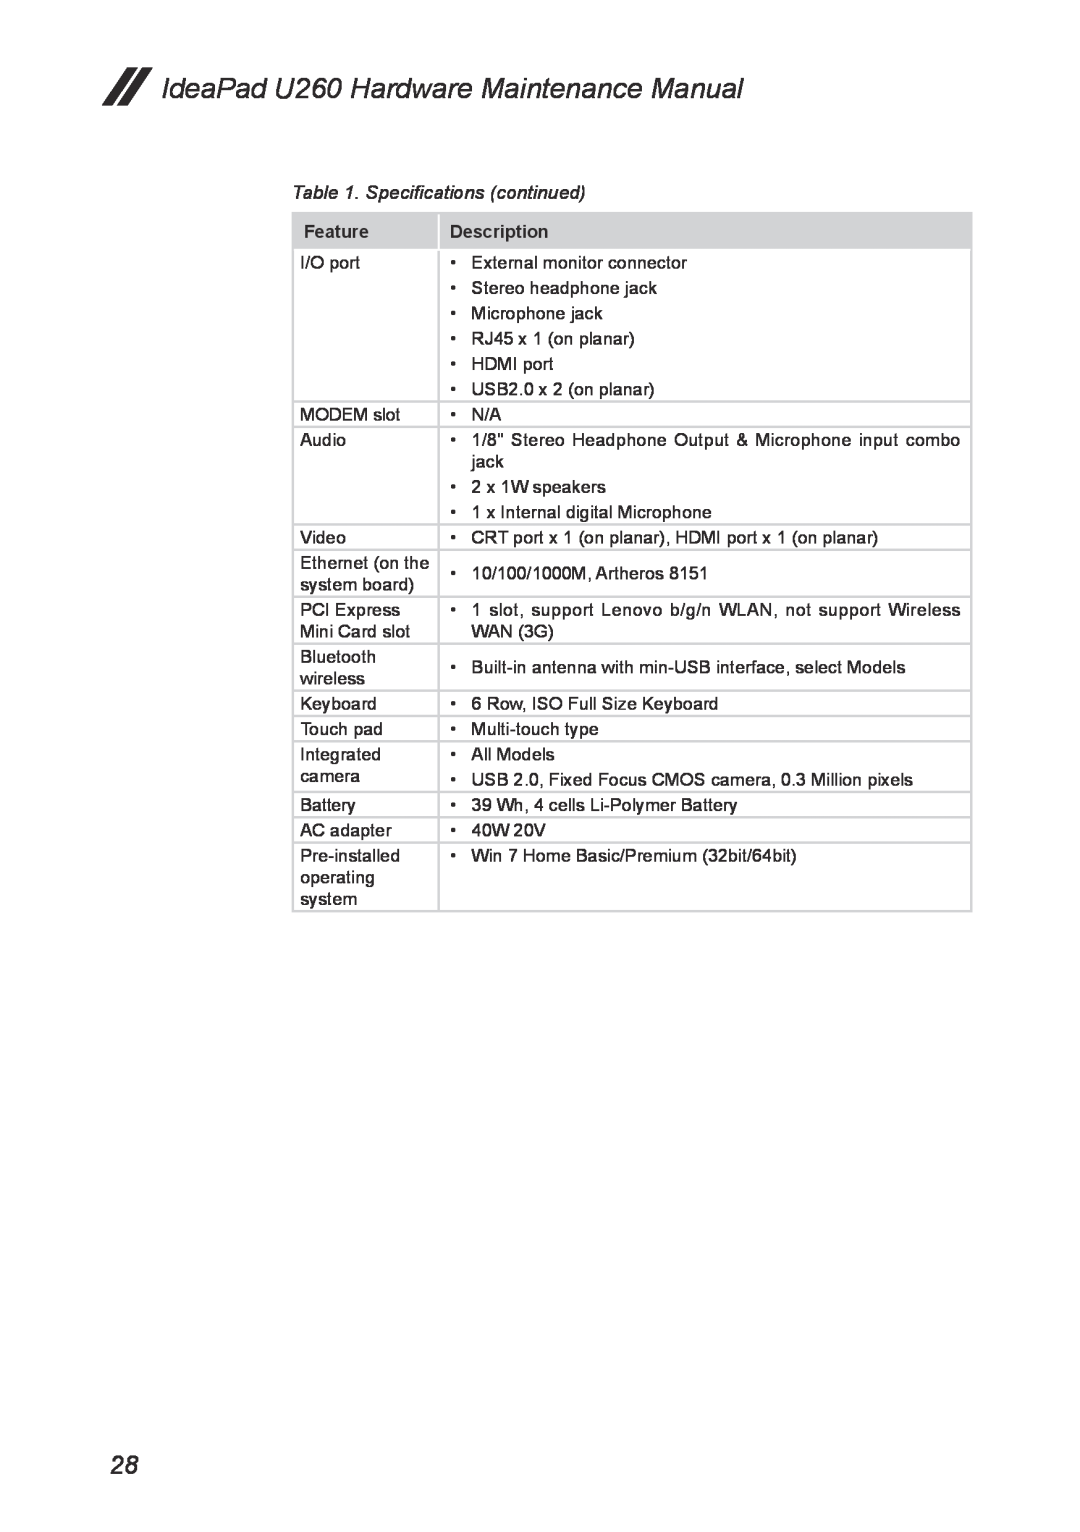 Lenovo manual Specifications continued, IdeaPad U260 Hardware Maintenance Manual, Feature, Description 